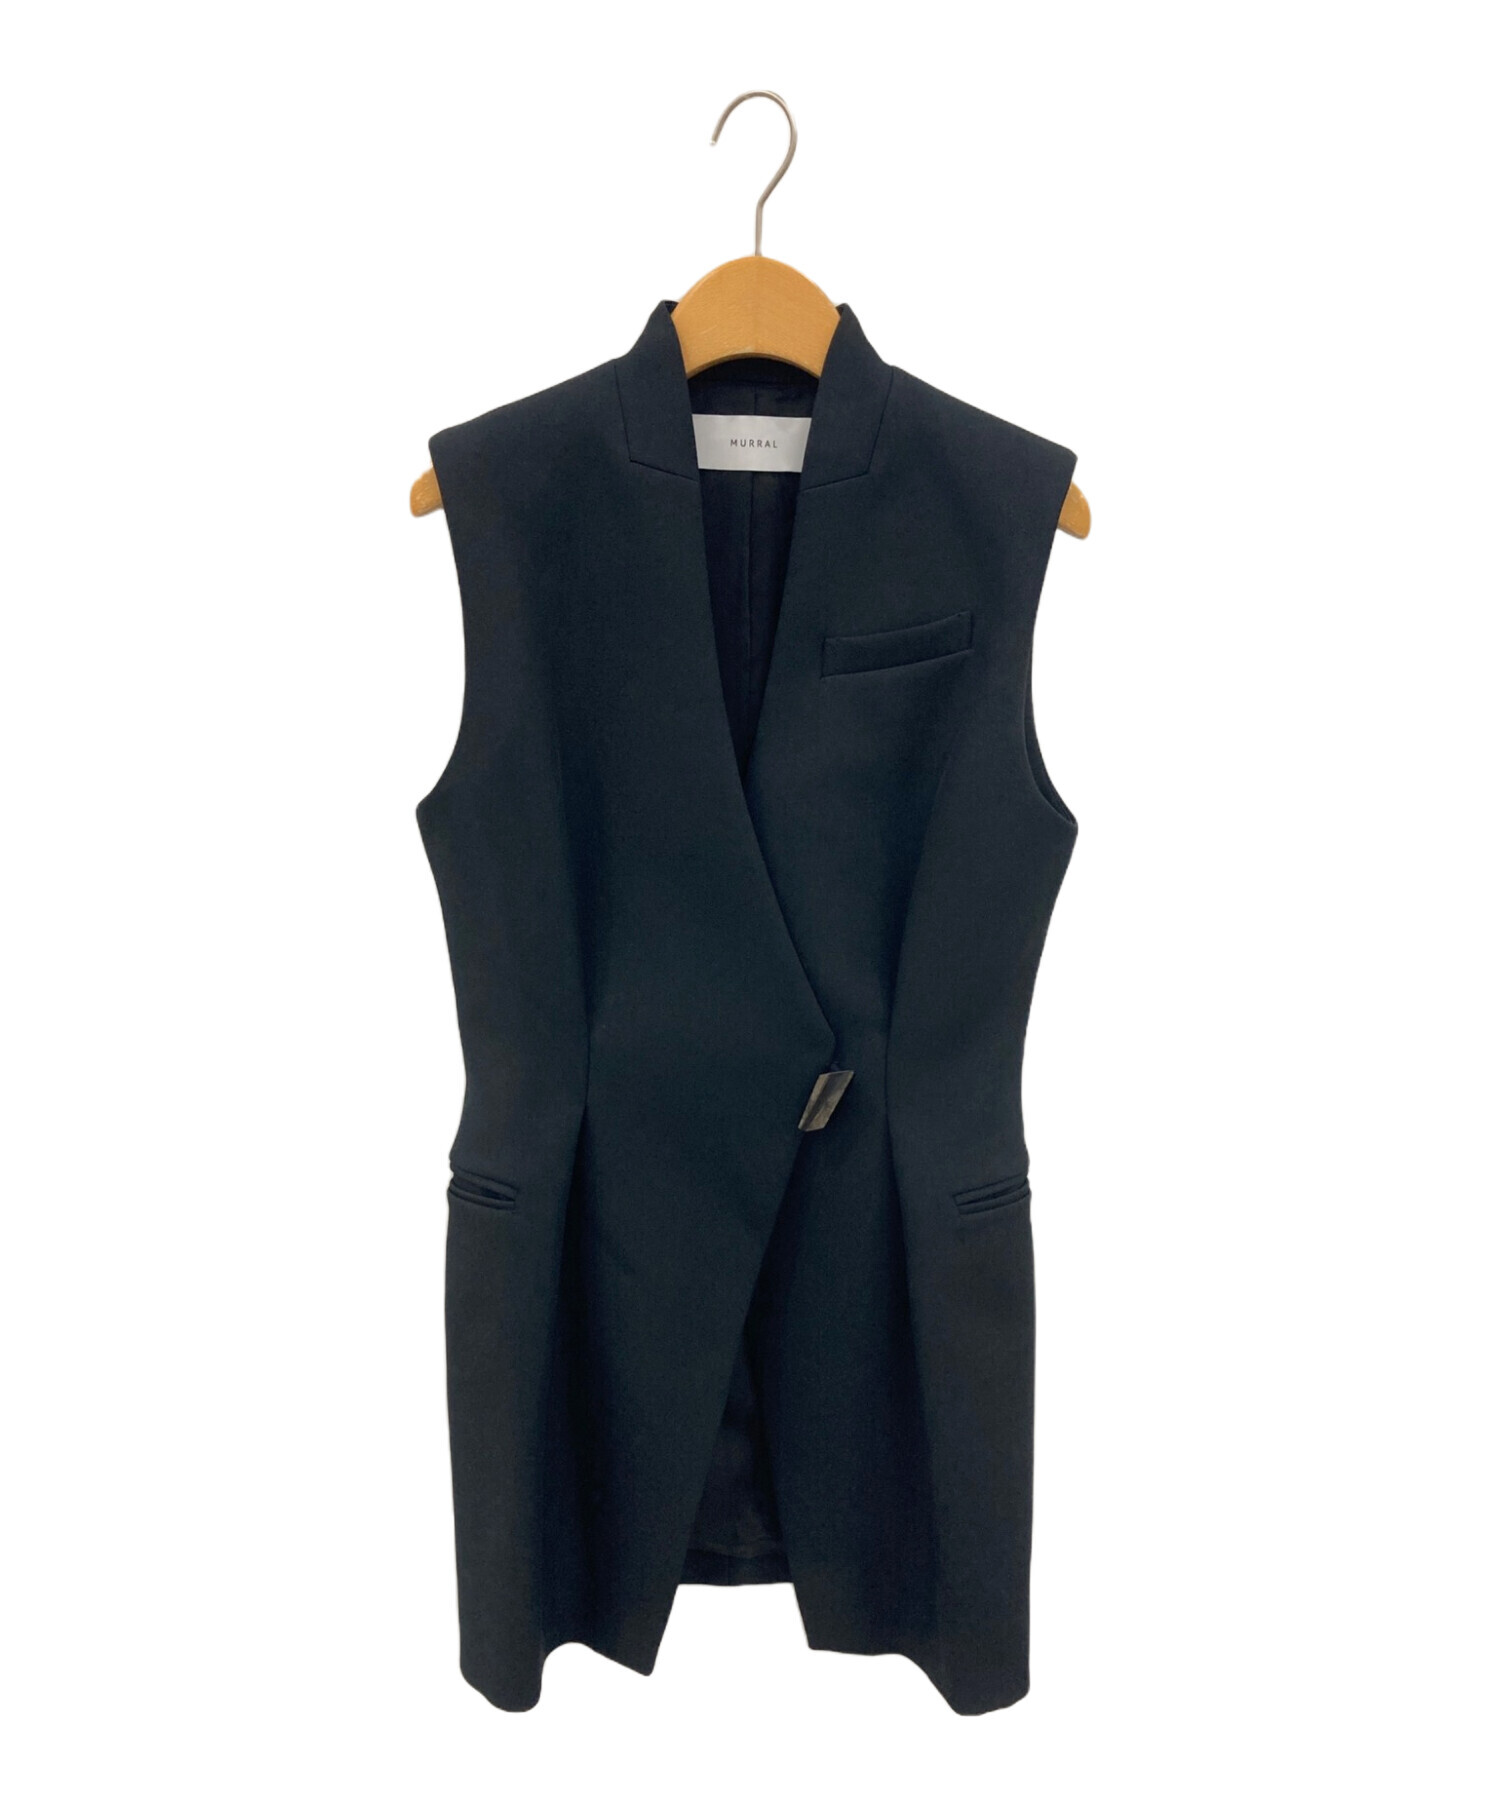 MURRAL (ミューラル) Umbrella vest ブラック サイズ:F